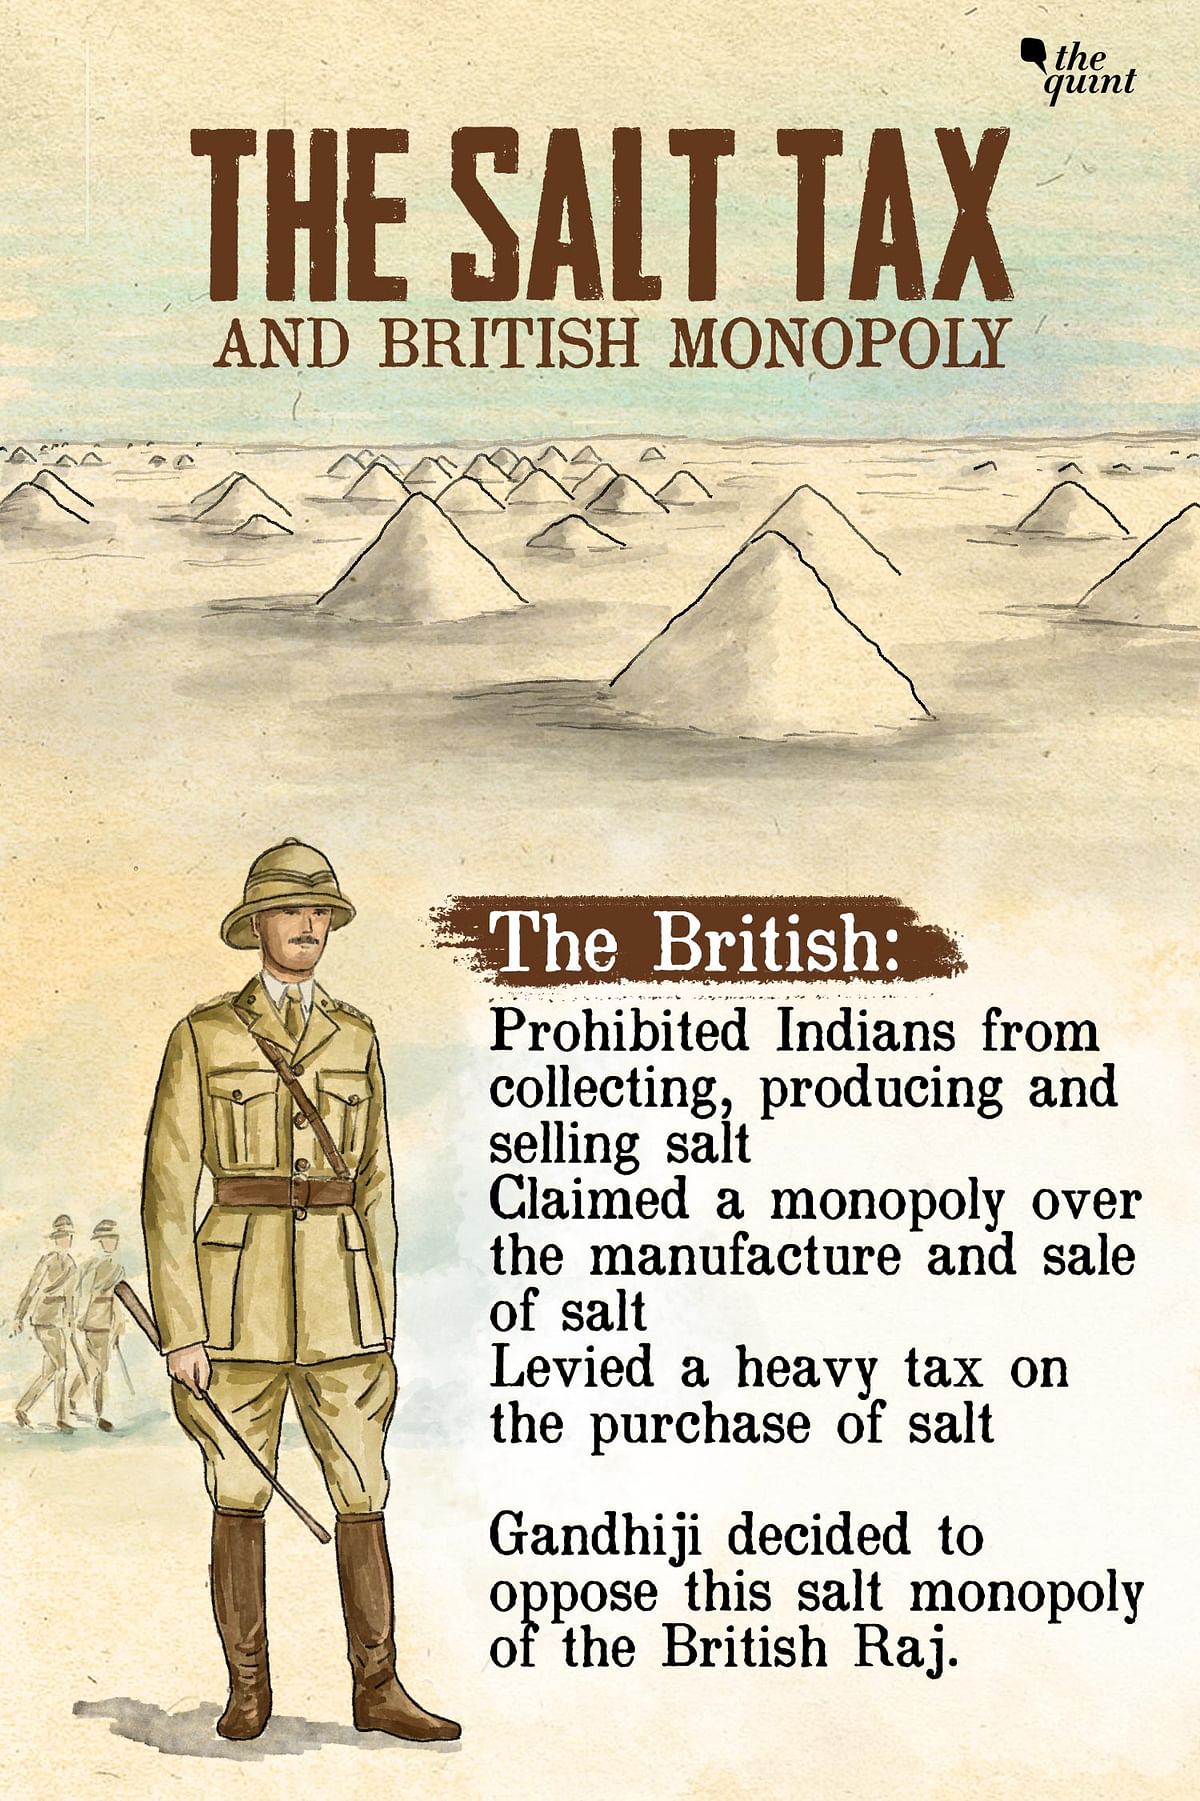 In March 1930, Gandhi led a historic Dandi March against the British govt’s unfair Salt Tax & shook its foundation.